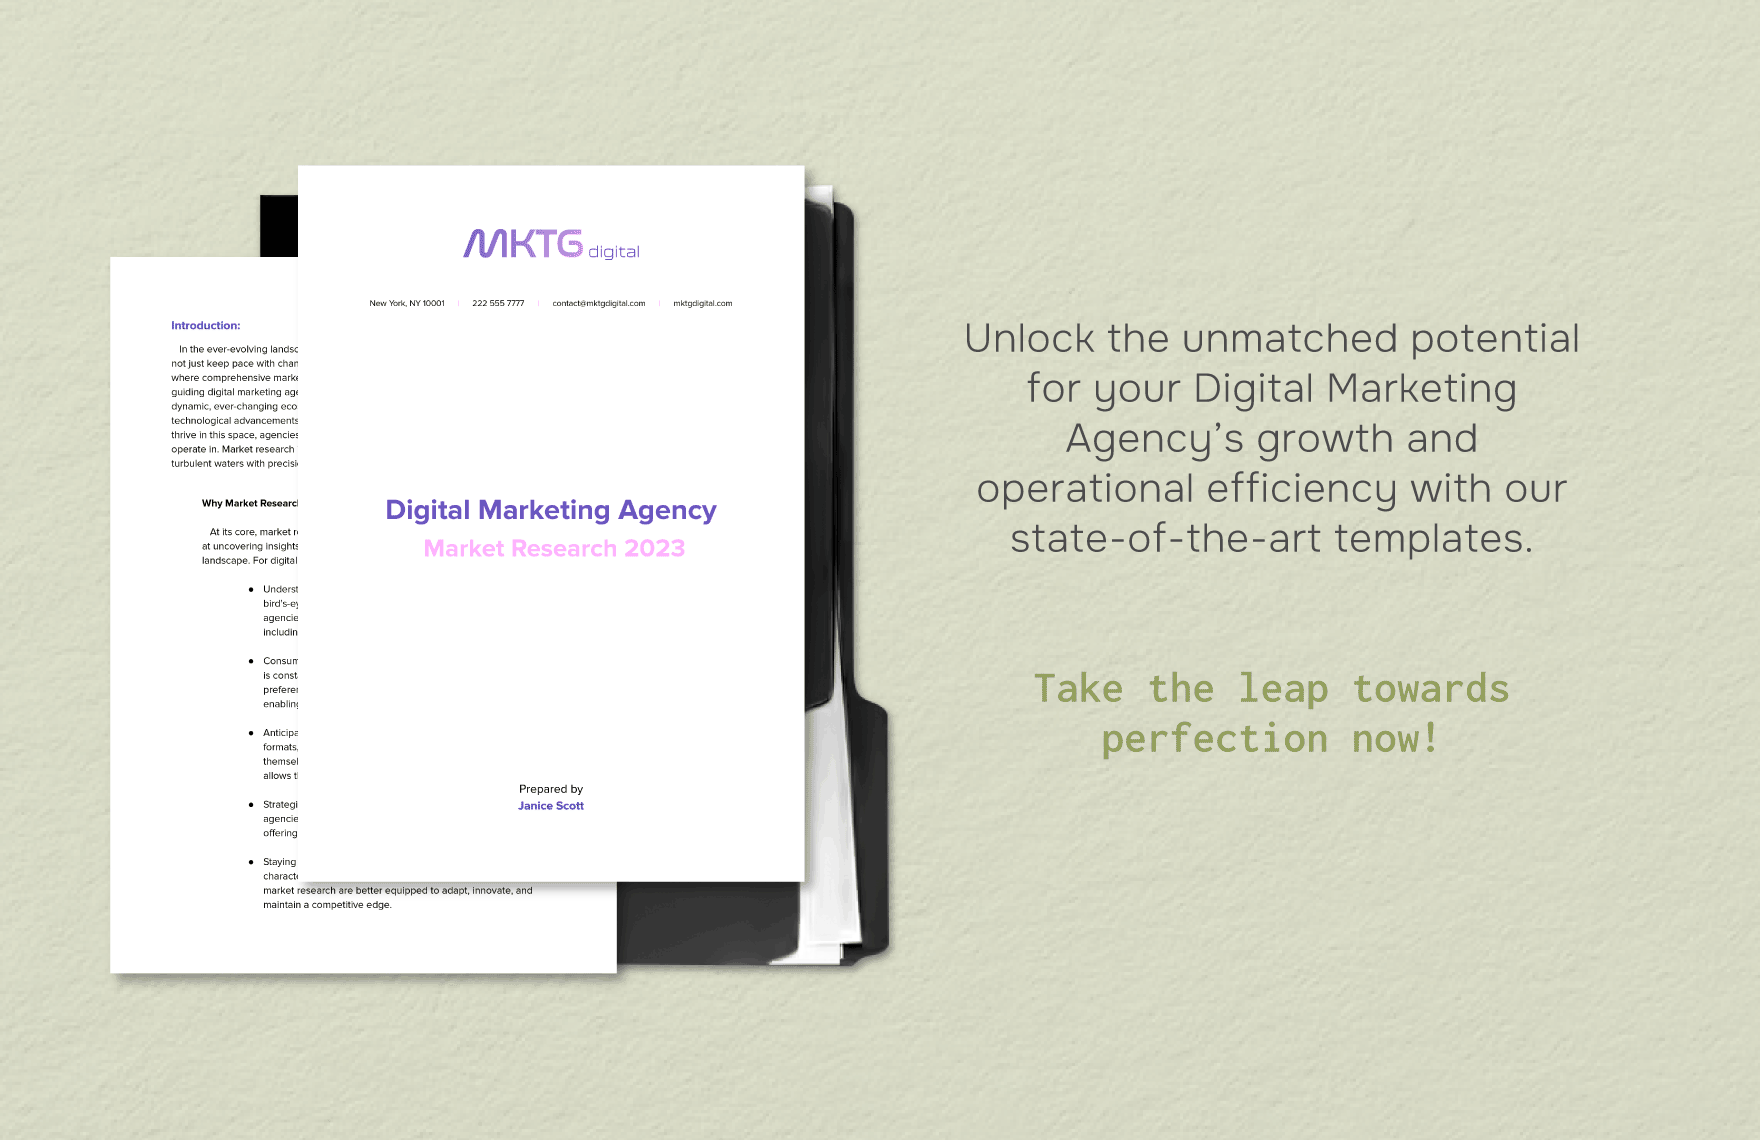 Digital Marketing Agency Market Research 2023 Template